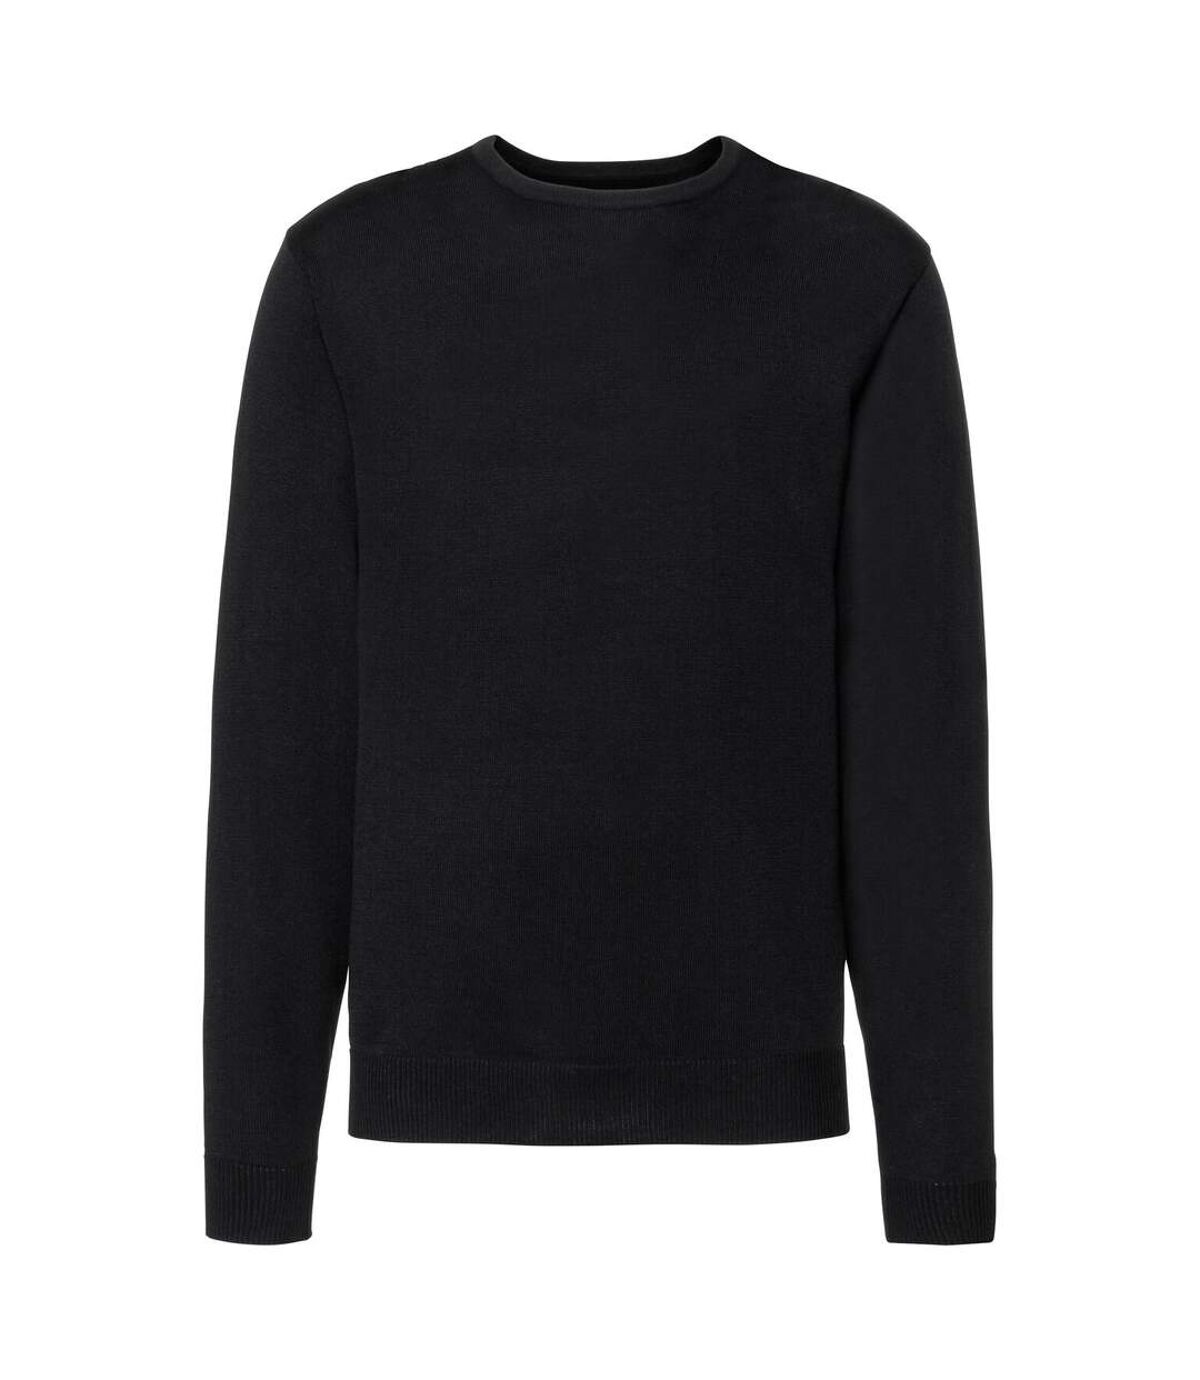 Russell Mens Cotton Acrylic Crew Neck Sweater (Black) - UTPC3139